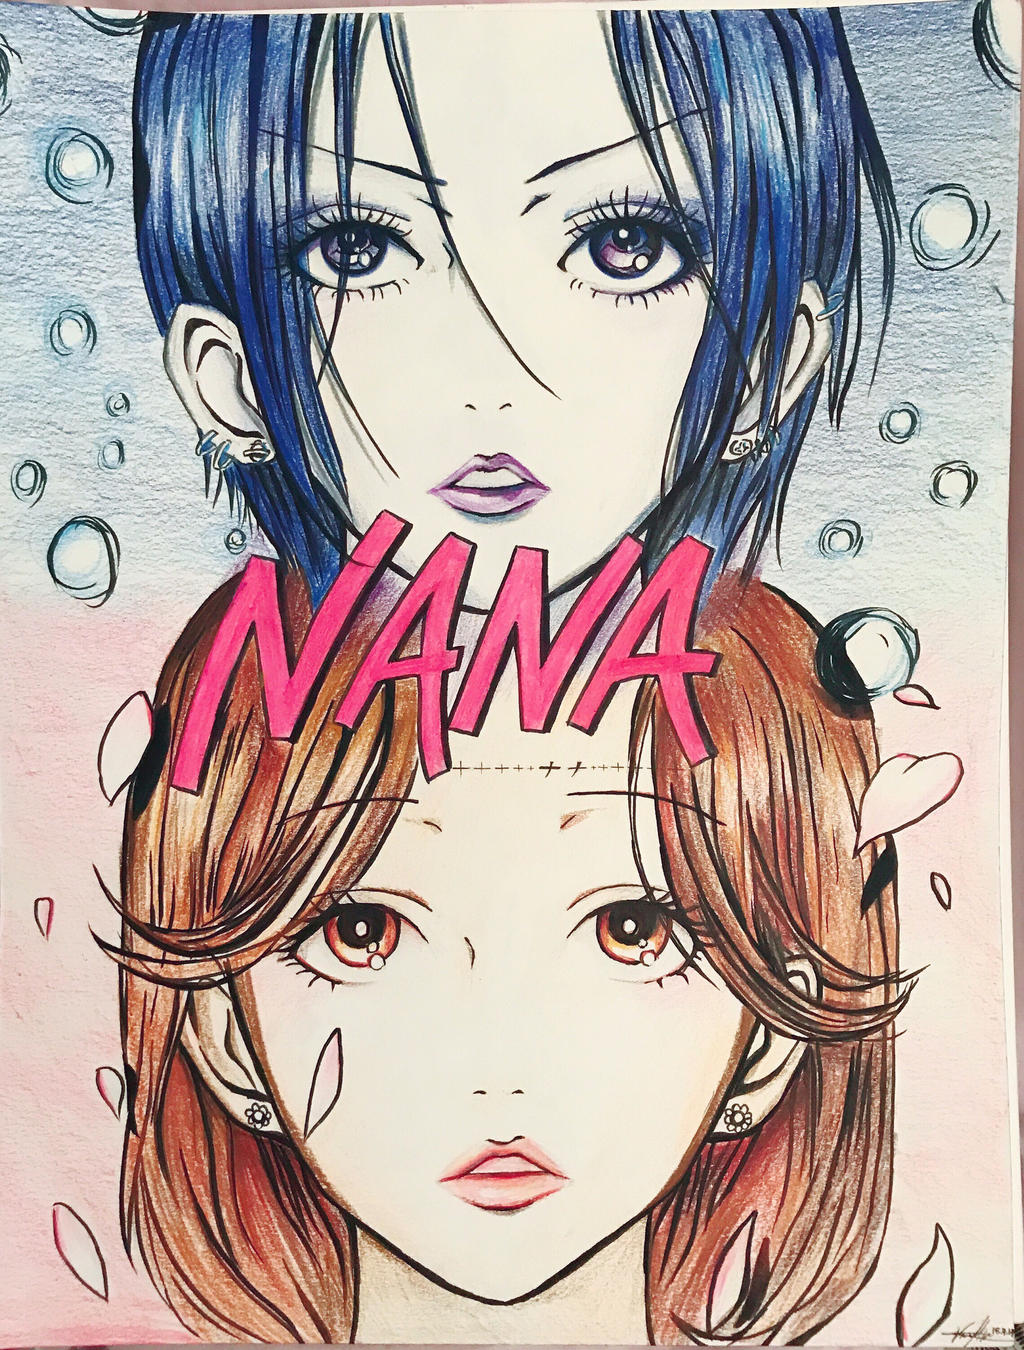 Nana(anime) by vansiee on DeviantArt